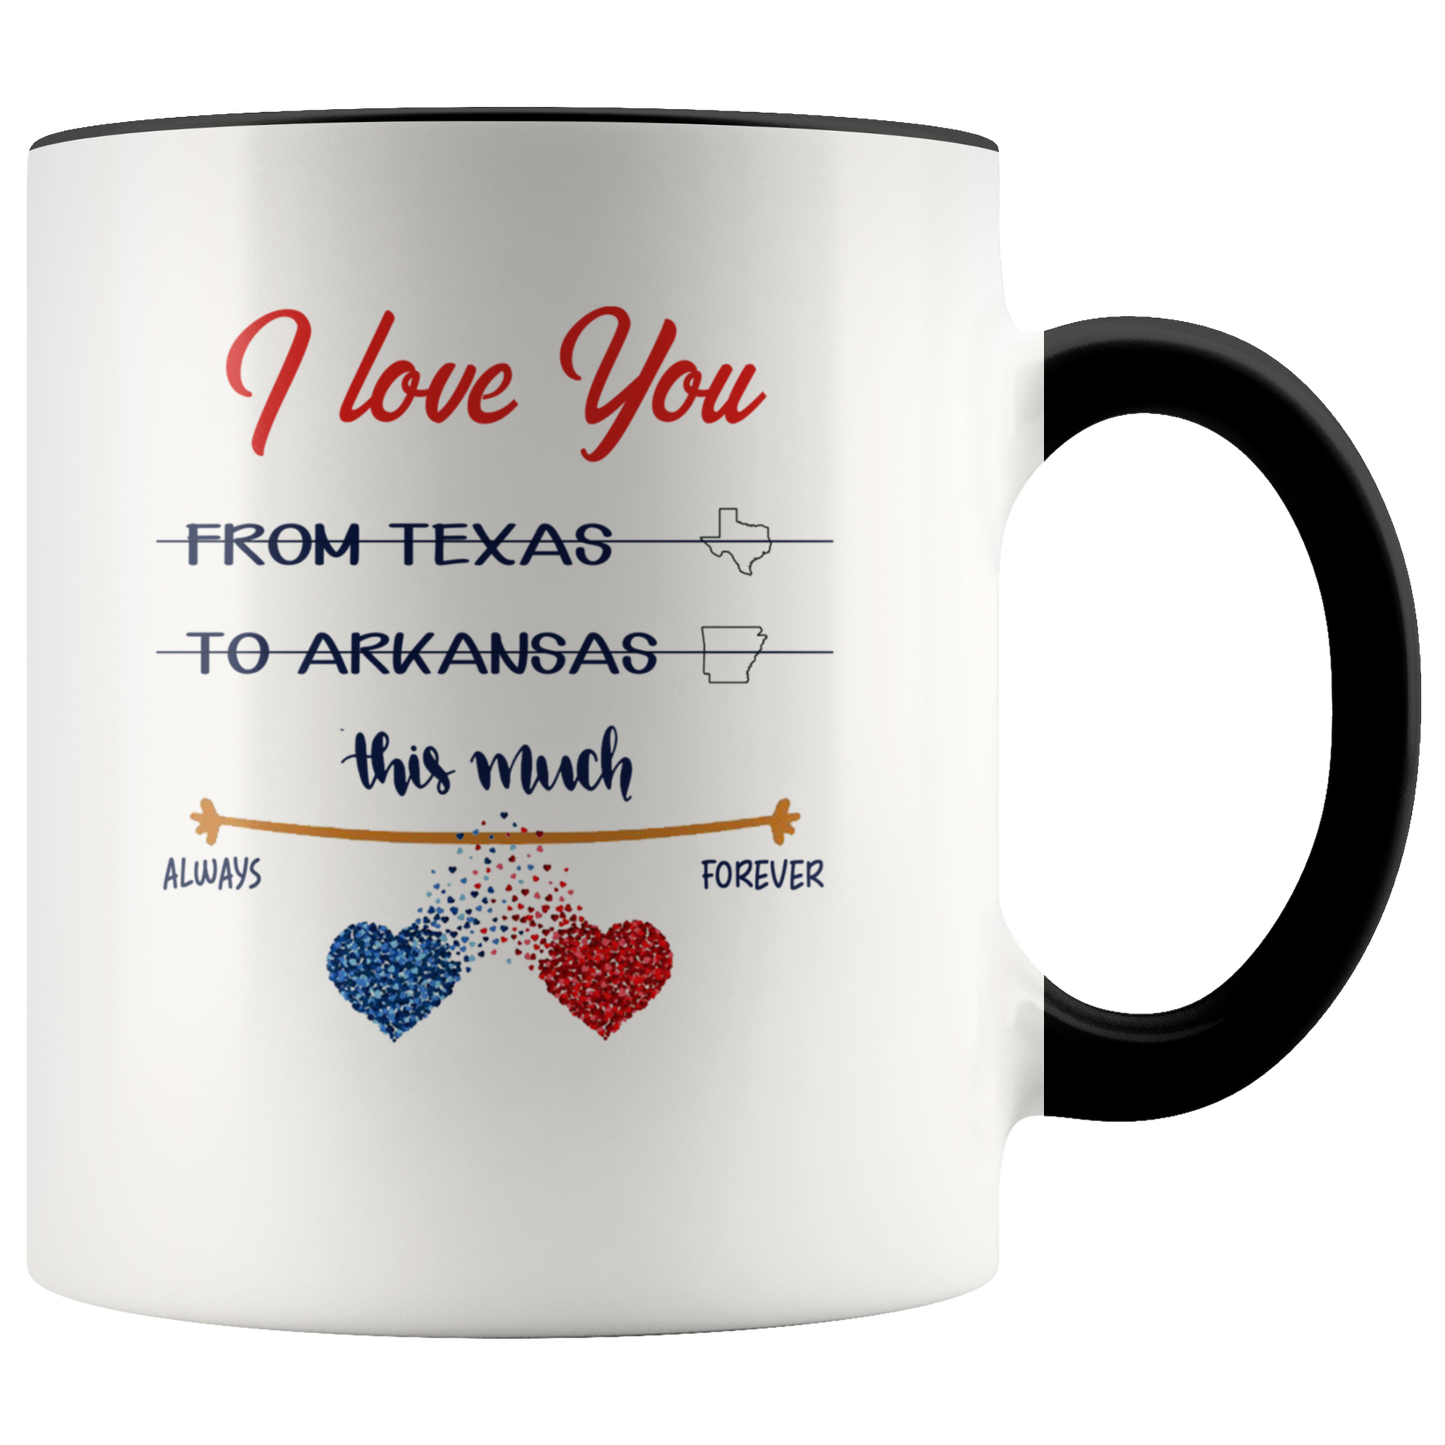 M-21394347-sp-23683 - [ Texas | Arkansas ]Long Distance Valentines Gifts Mug From Texas To Arkansas -